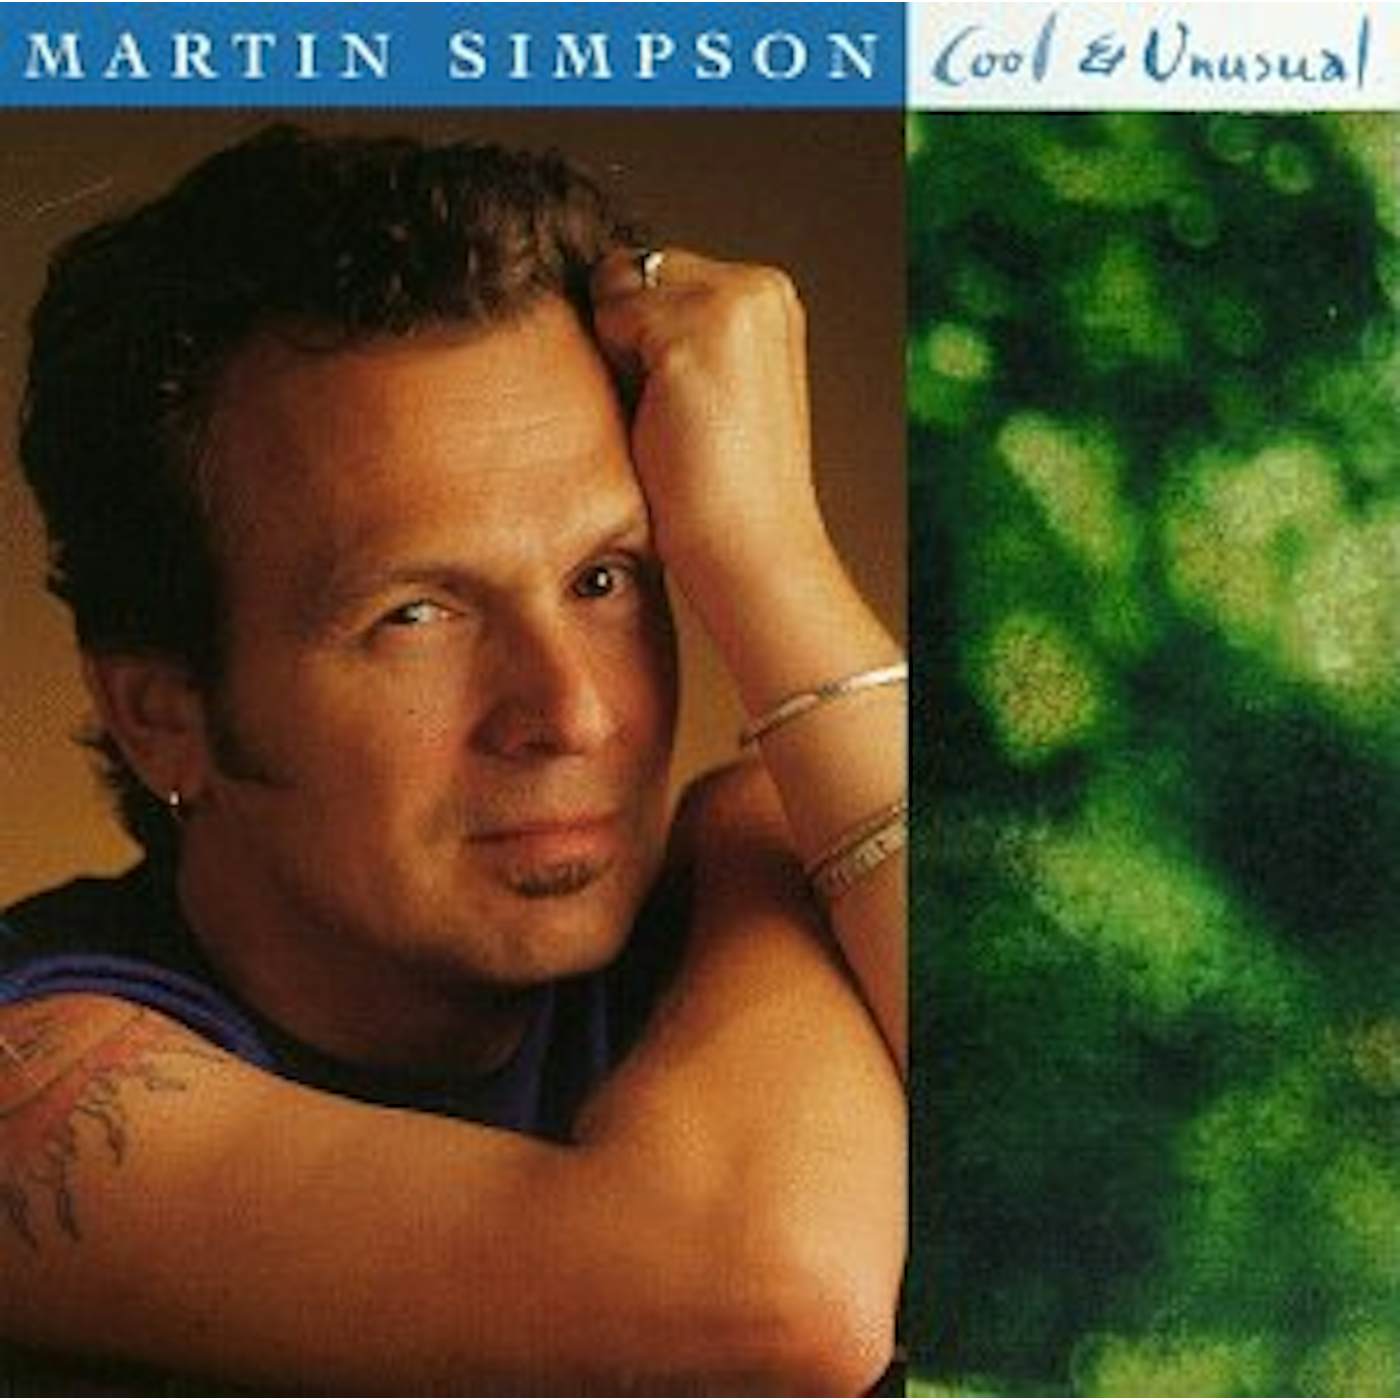 Martin Simpson COOL & UNUSUAL CD